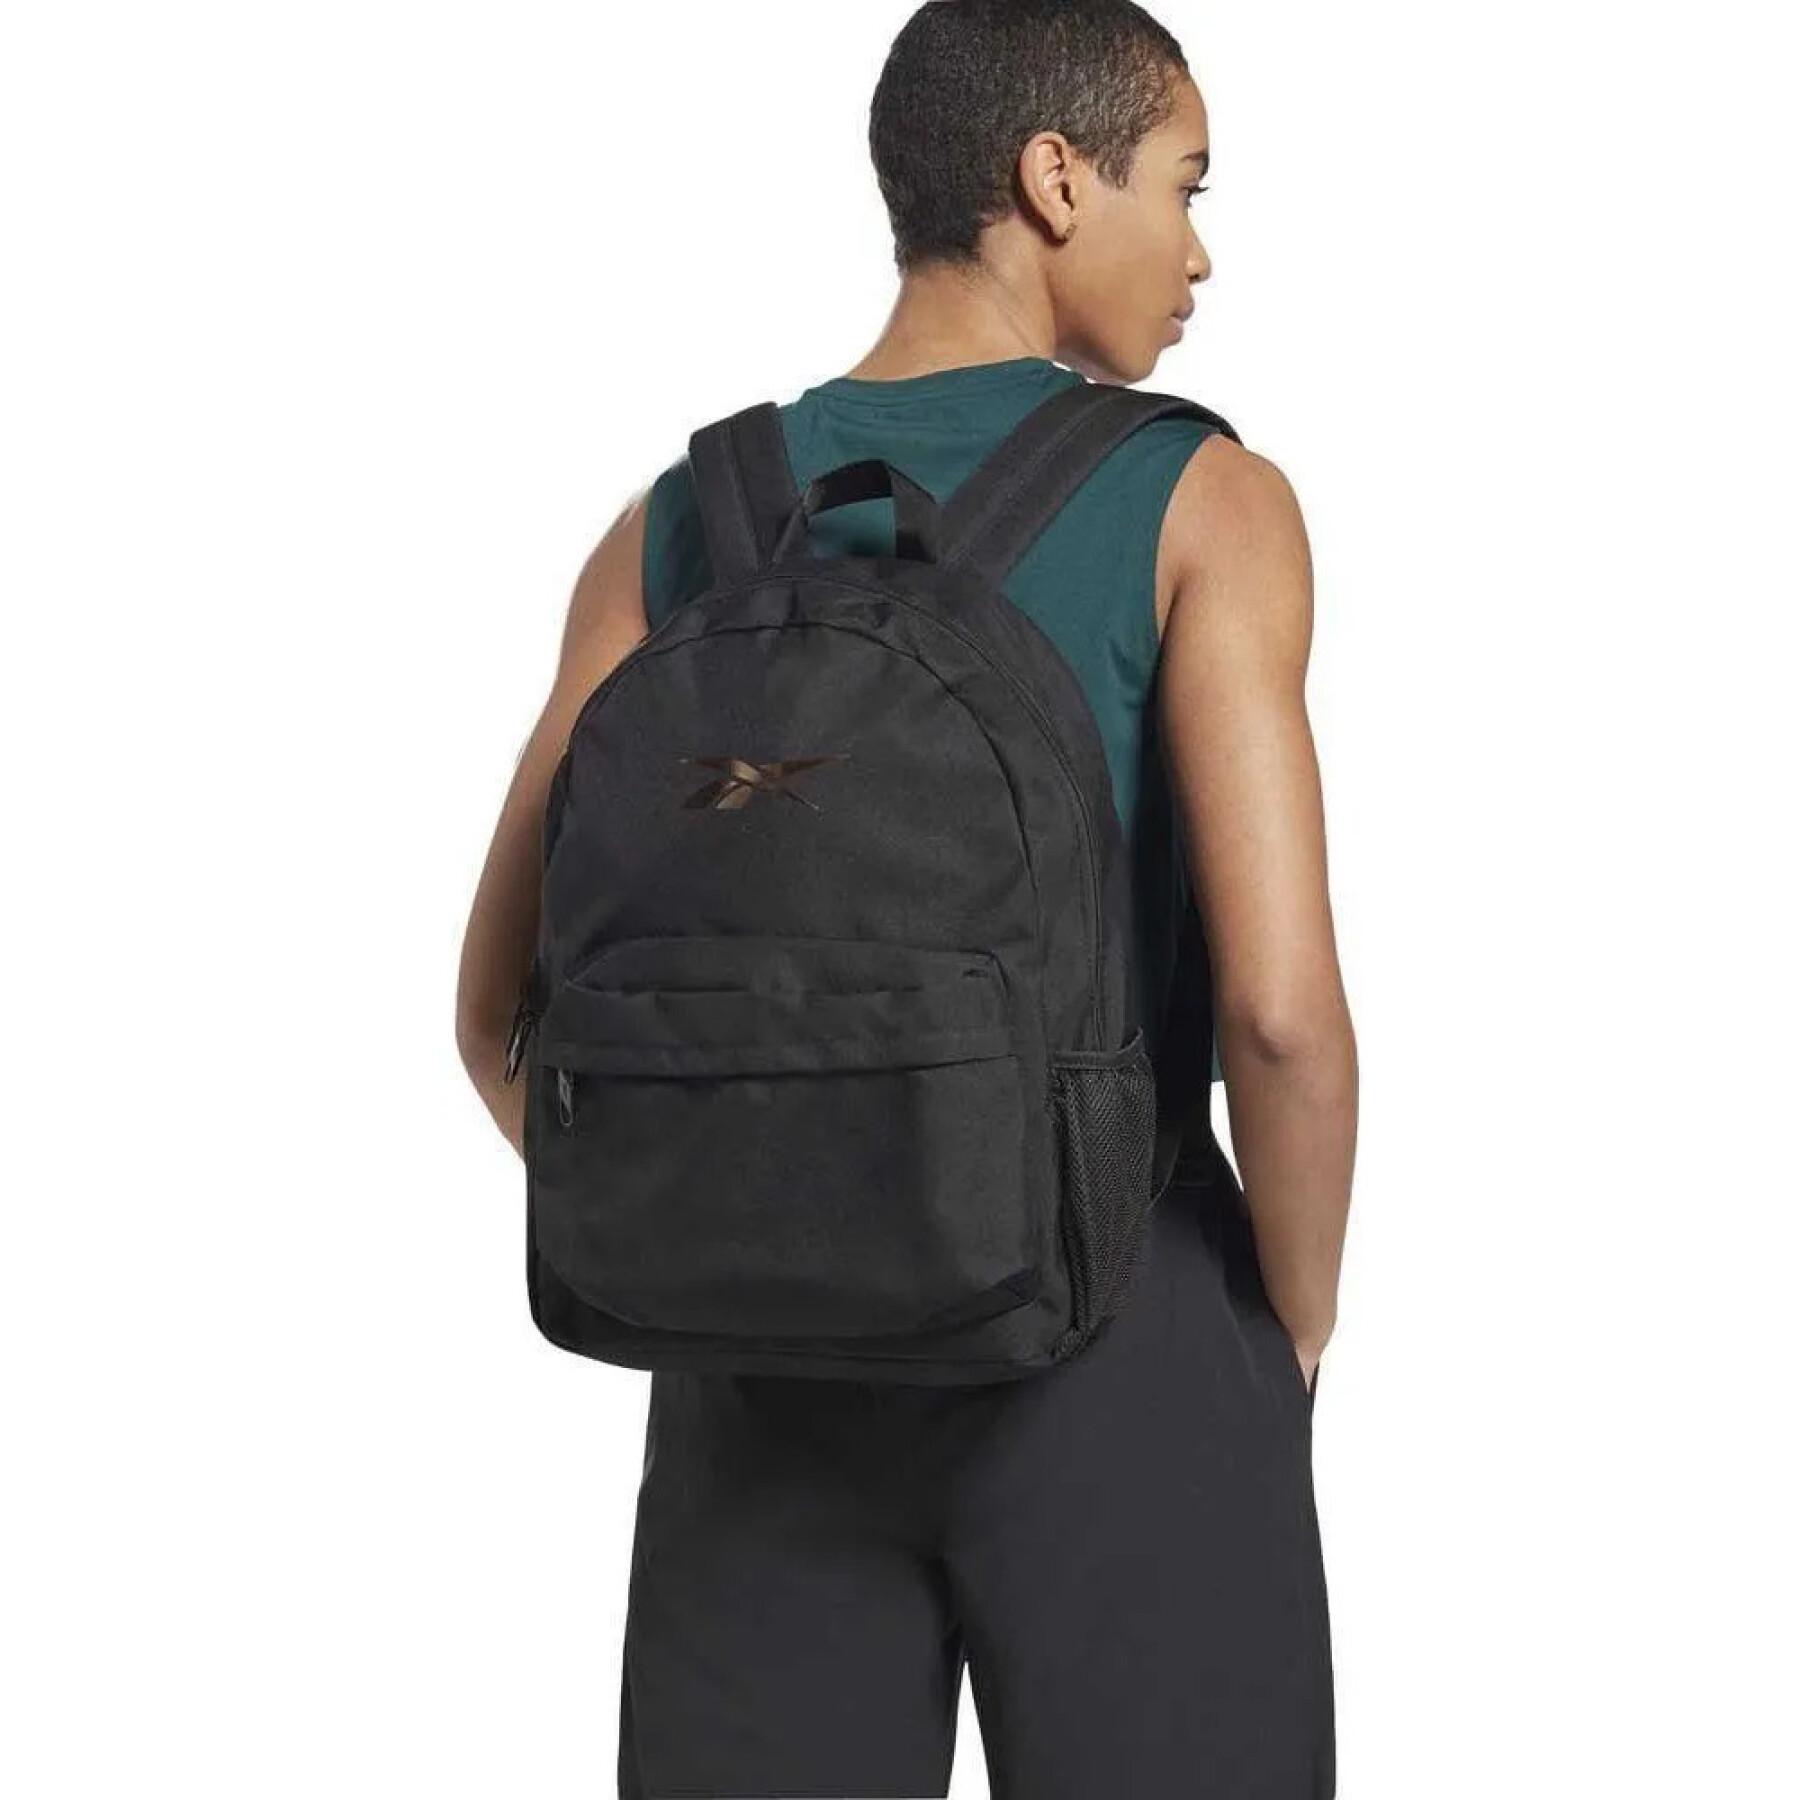 Women's backpack Reebok Rose Gold Black